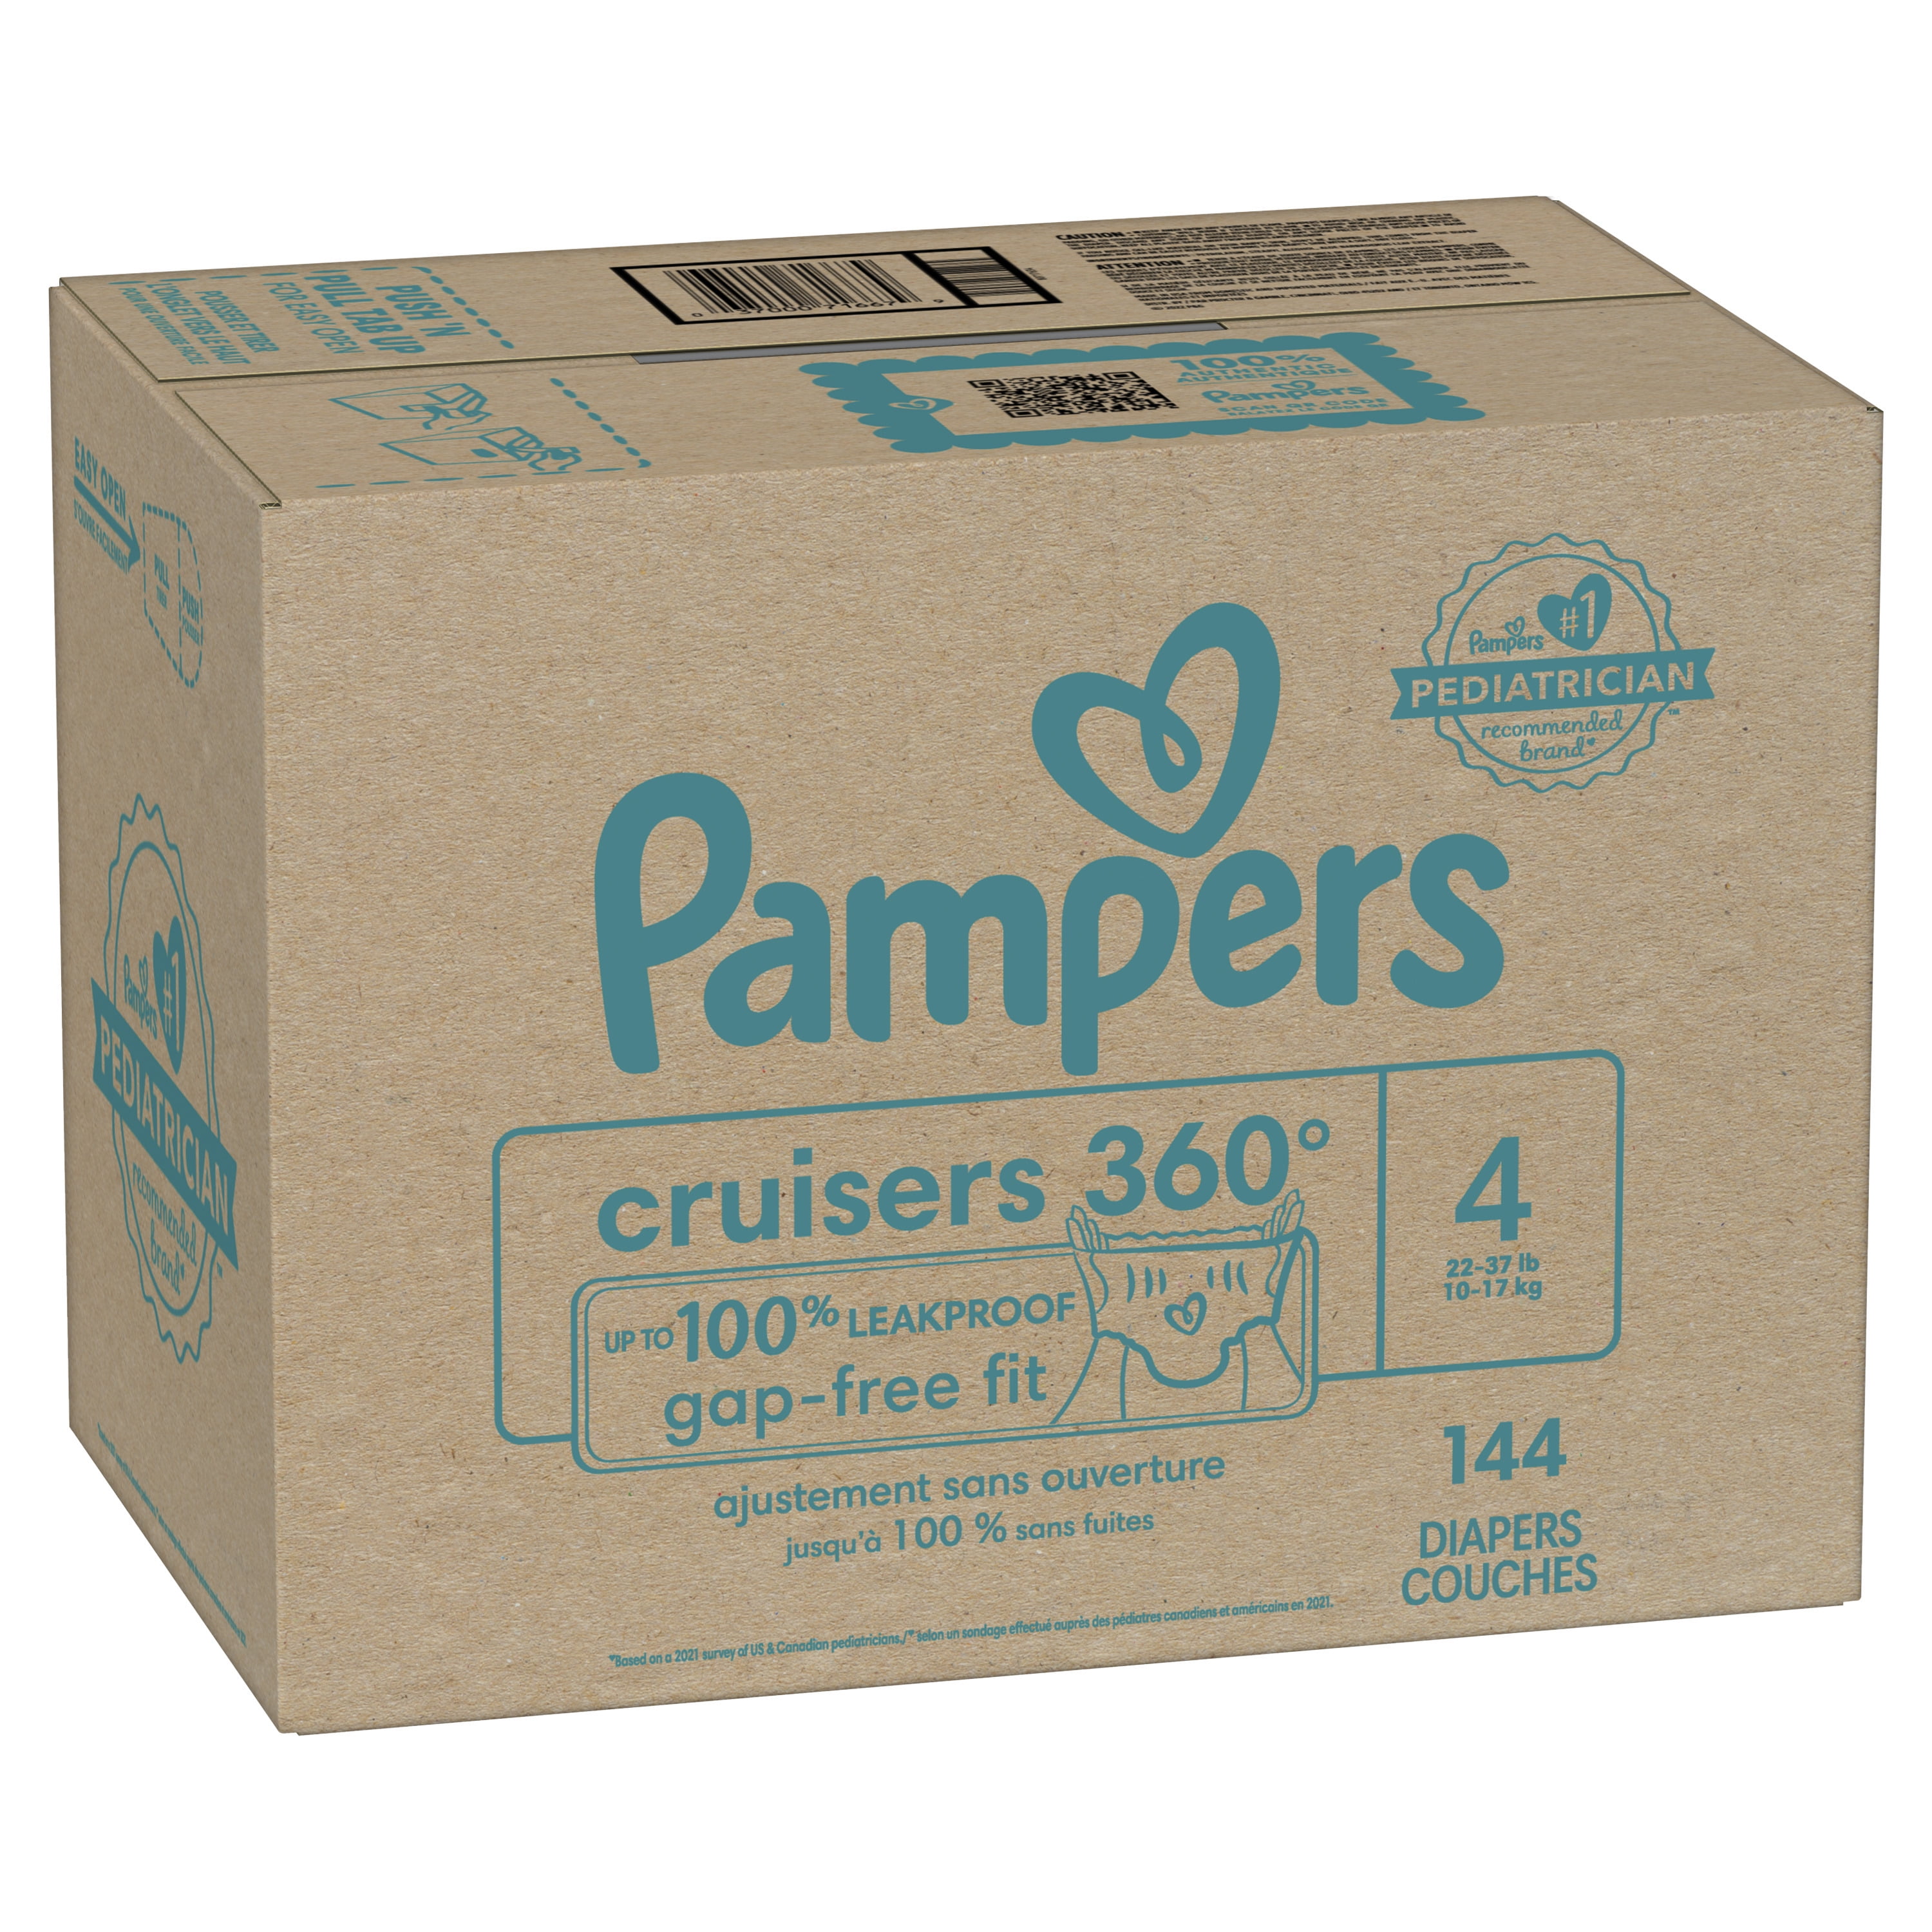 Comprar Pañales Pampers Cruisers 360° Pants Talla 4, 10-17kg - 64Uds, Walmart Costa Rica - Maxi Palí